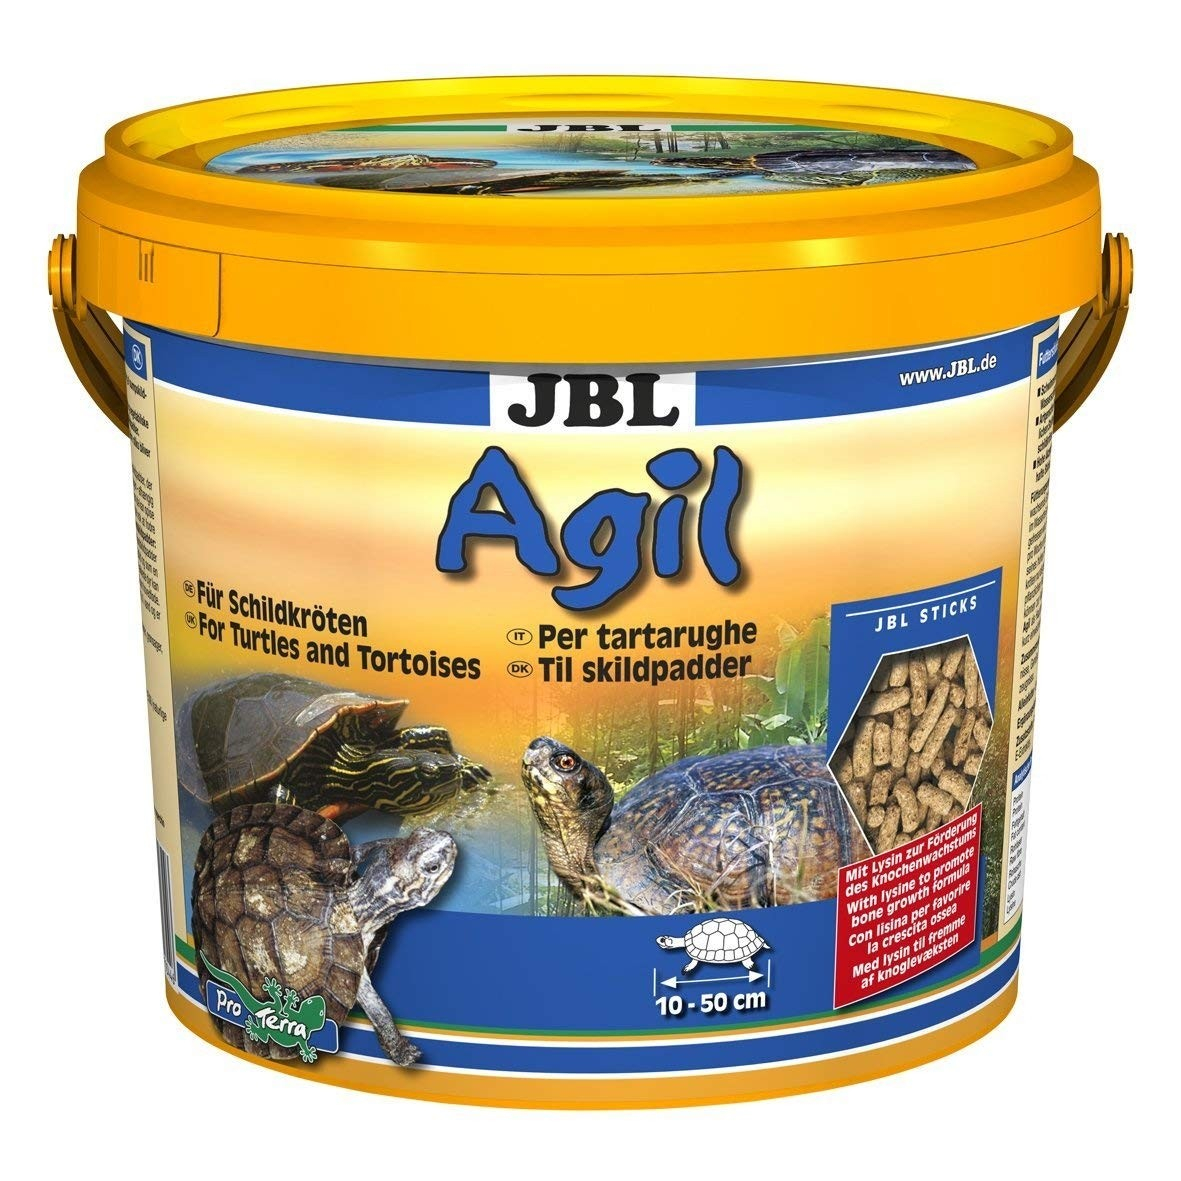 JBL Agil Comida em pauzinho para tartarugas